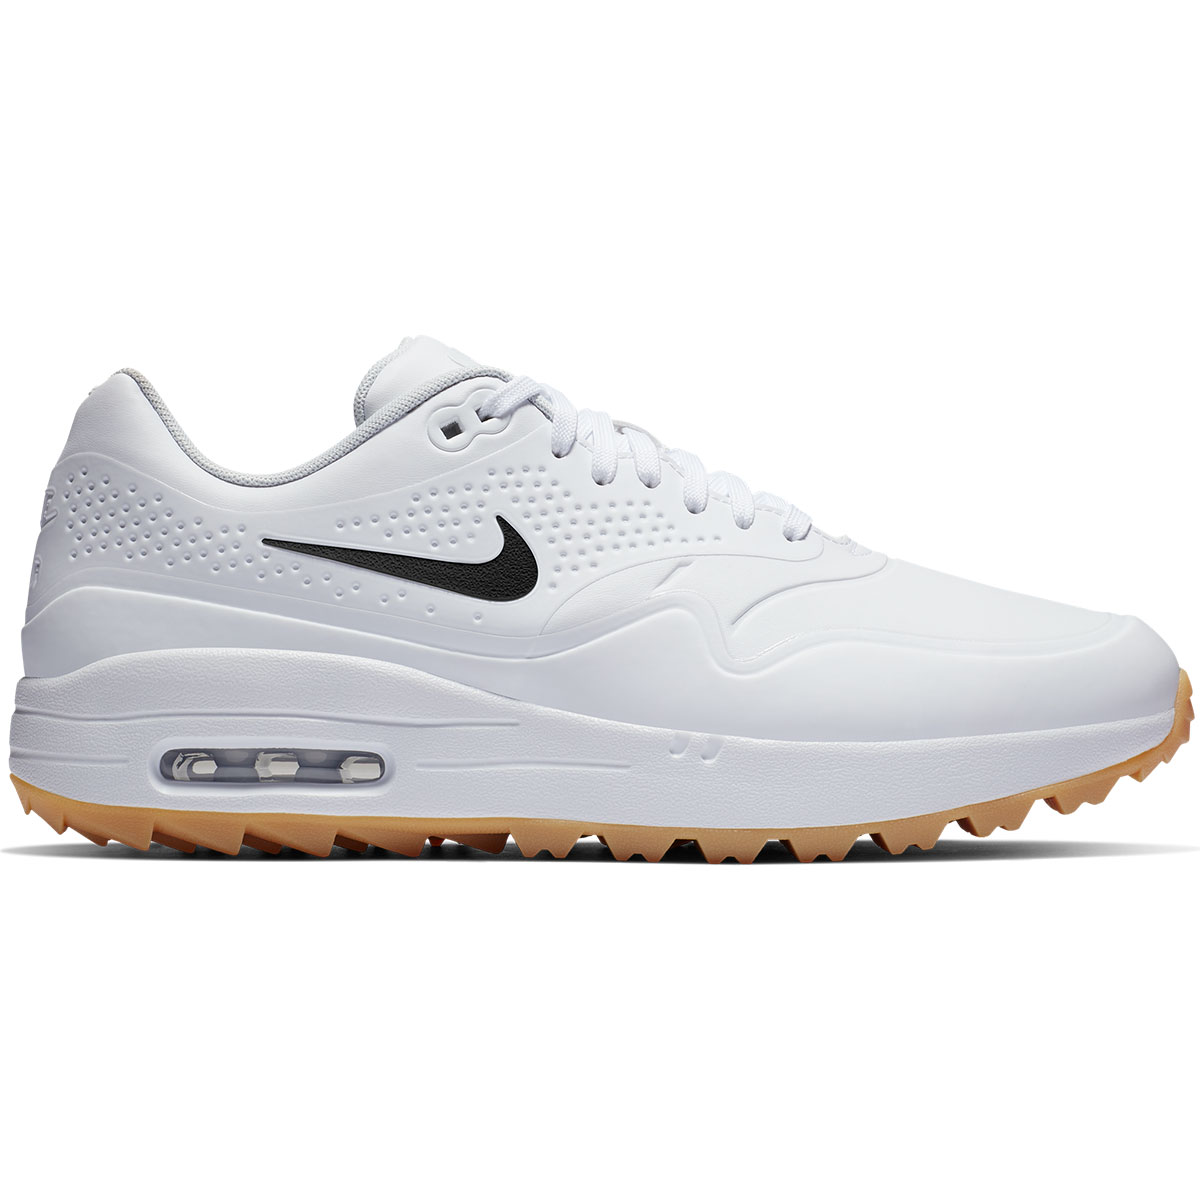 nike air max g1 golf shoes online -